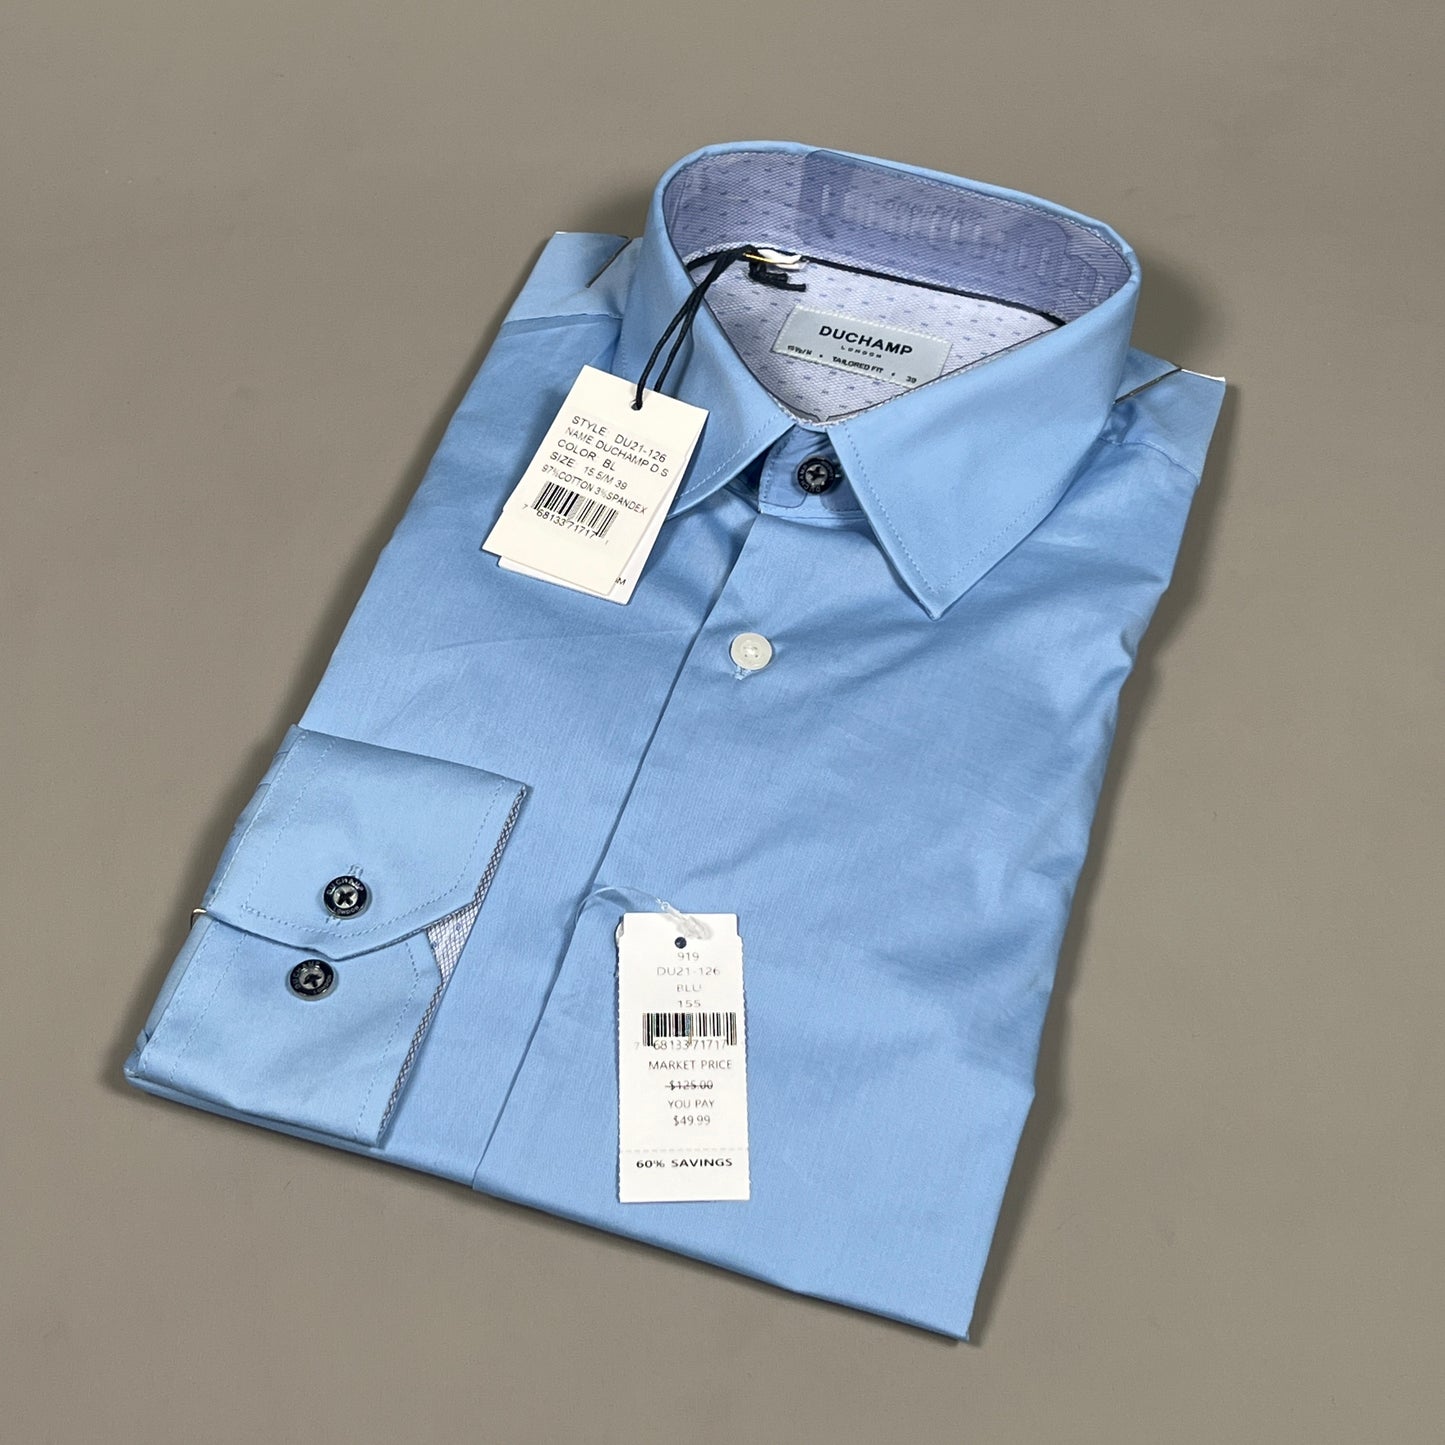 DUCHAMP LONDON Light Blue Solid Tailored-fit Dress Shirt Men's Sz M / 39 / 15.5 (New)